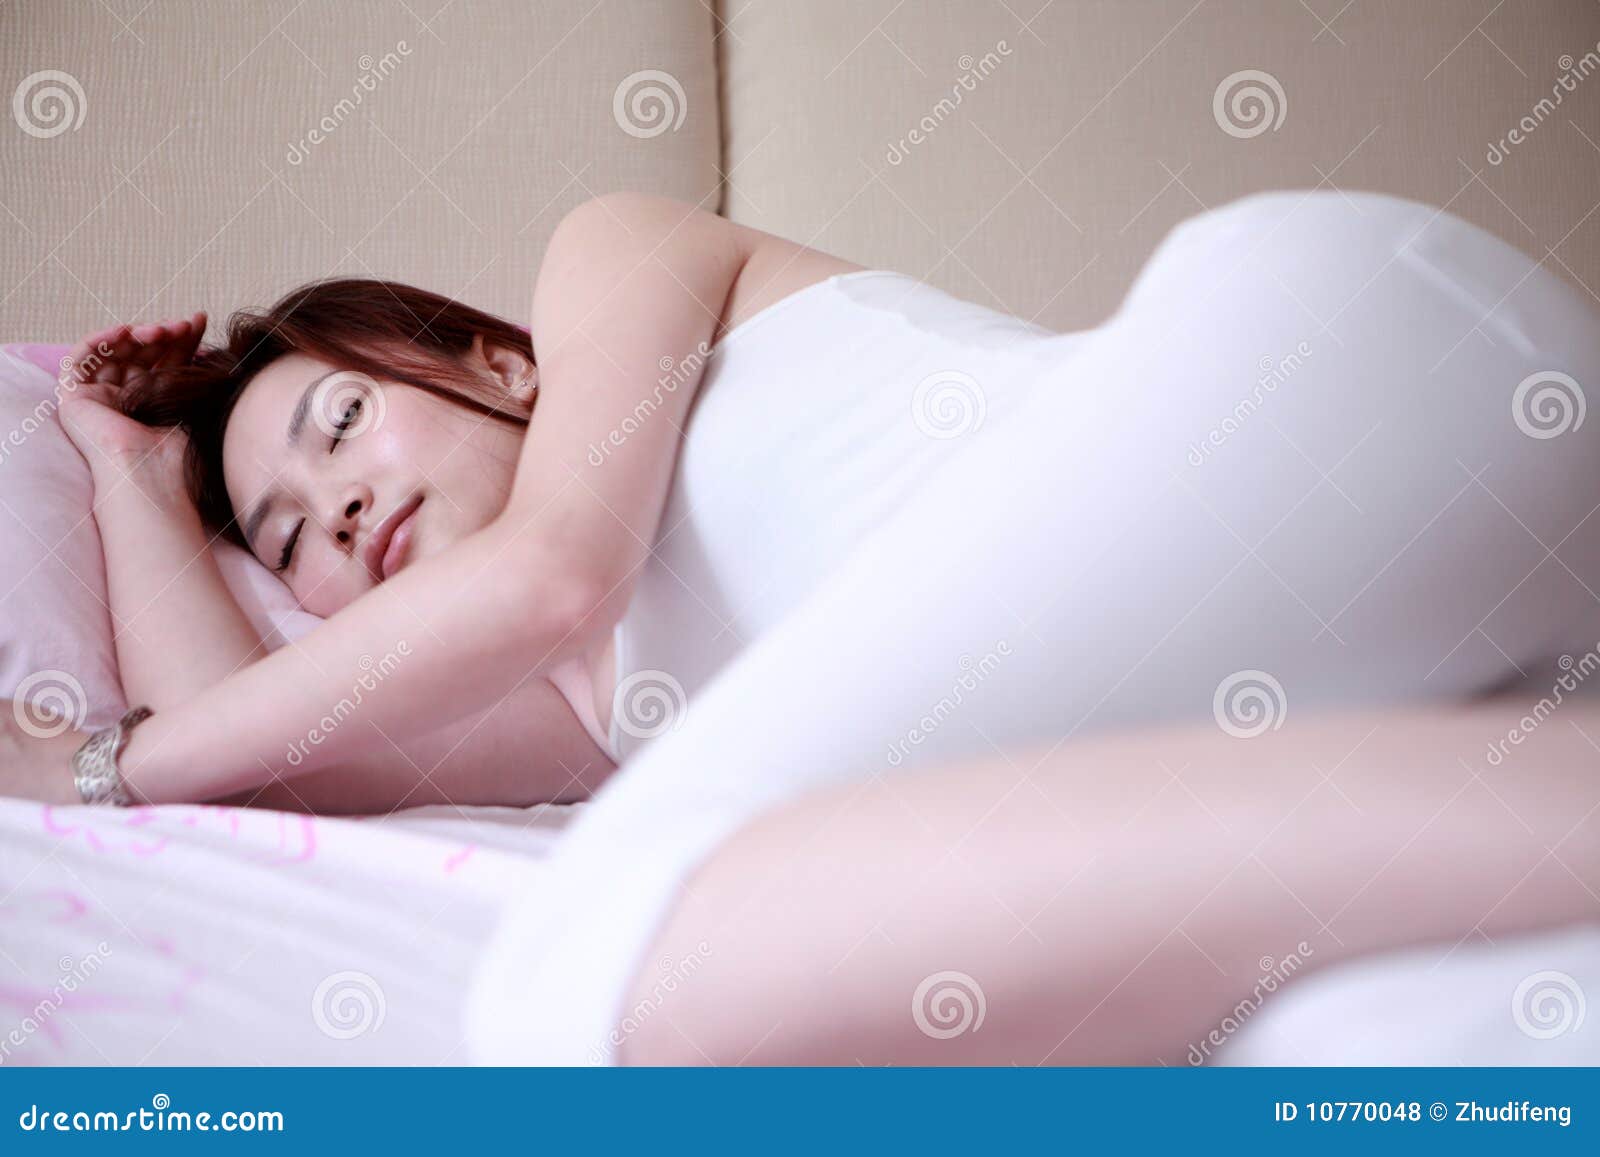 чем опасен оргазм при беременности во сне фото 84